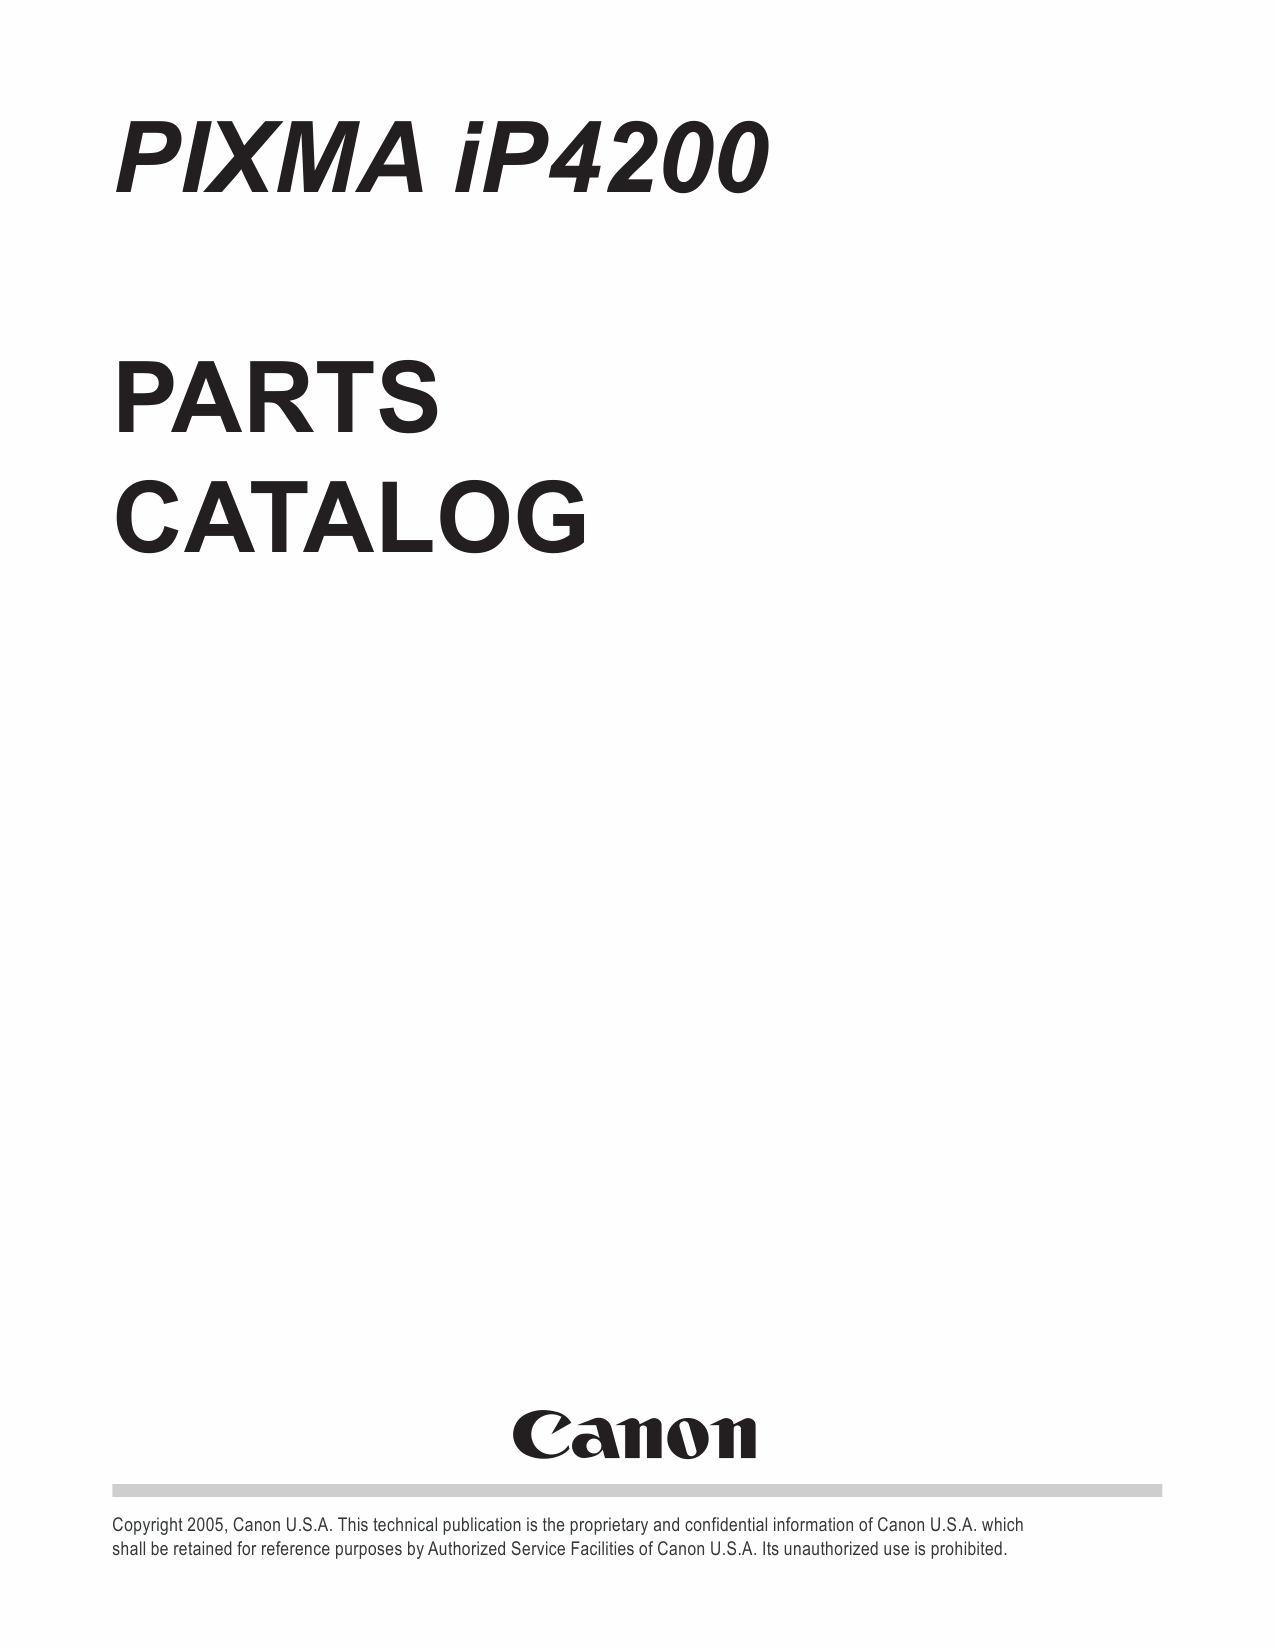 Canon PIXMA iP4200 Parts Catalog-1